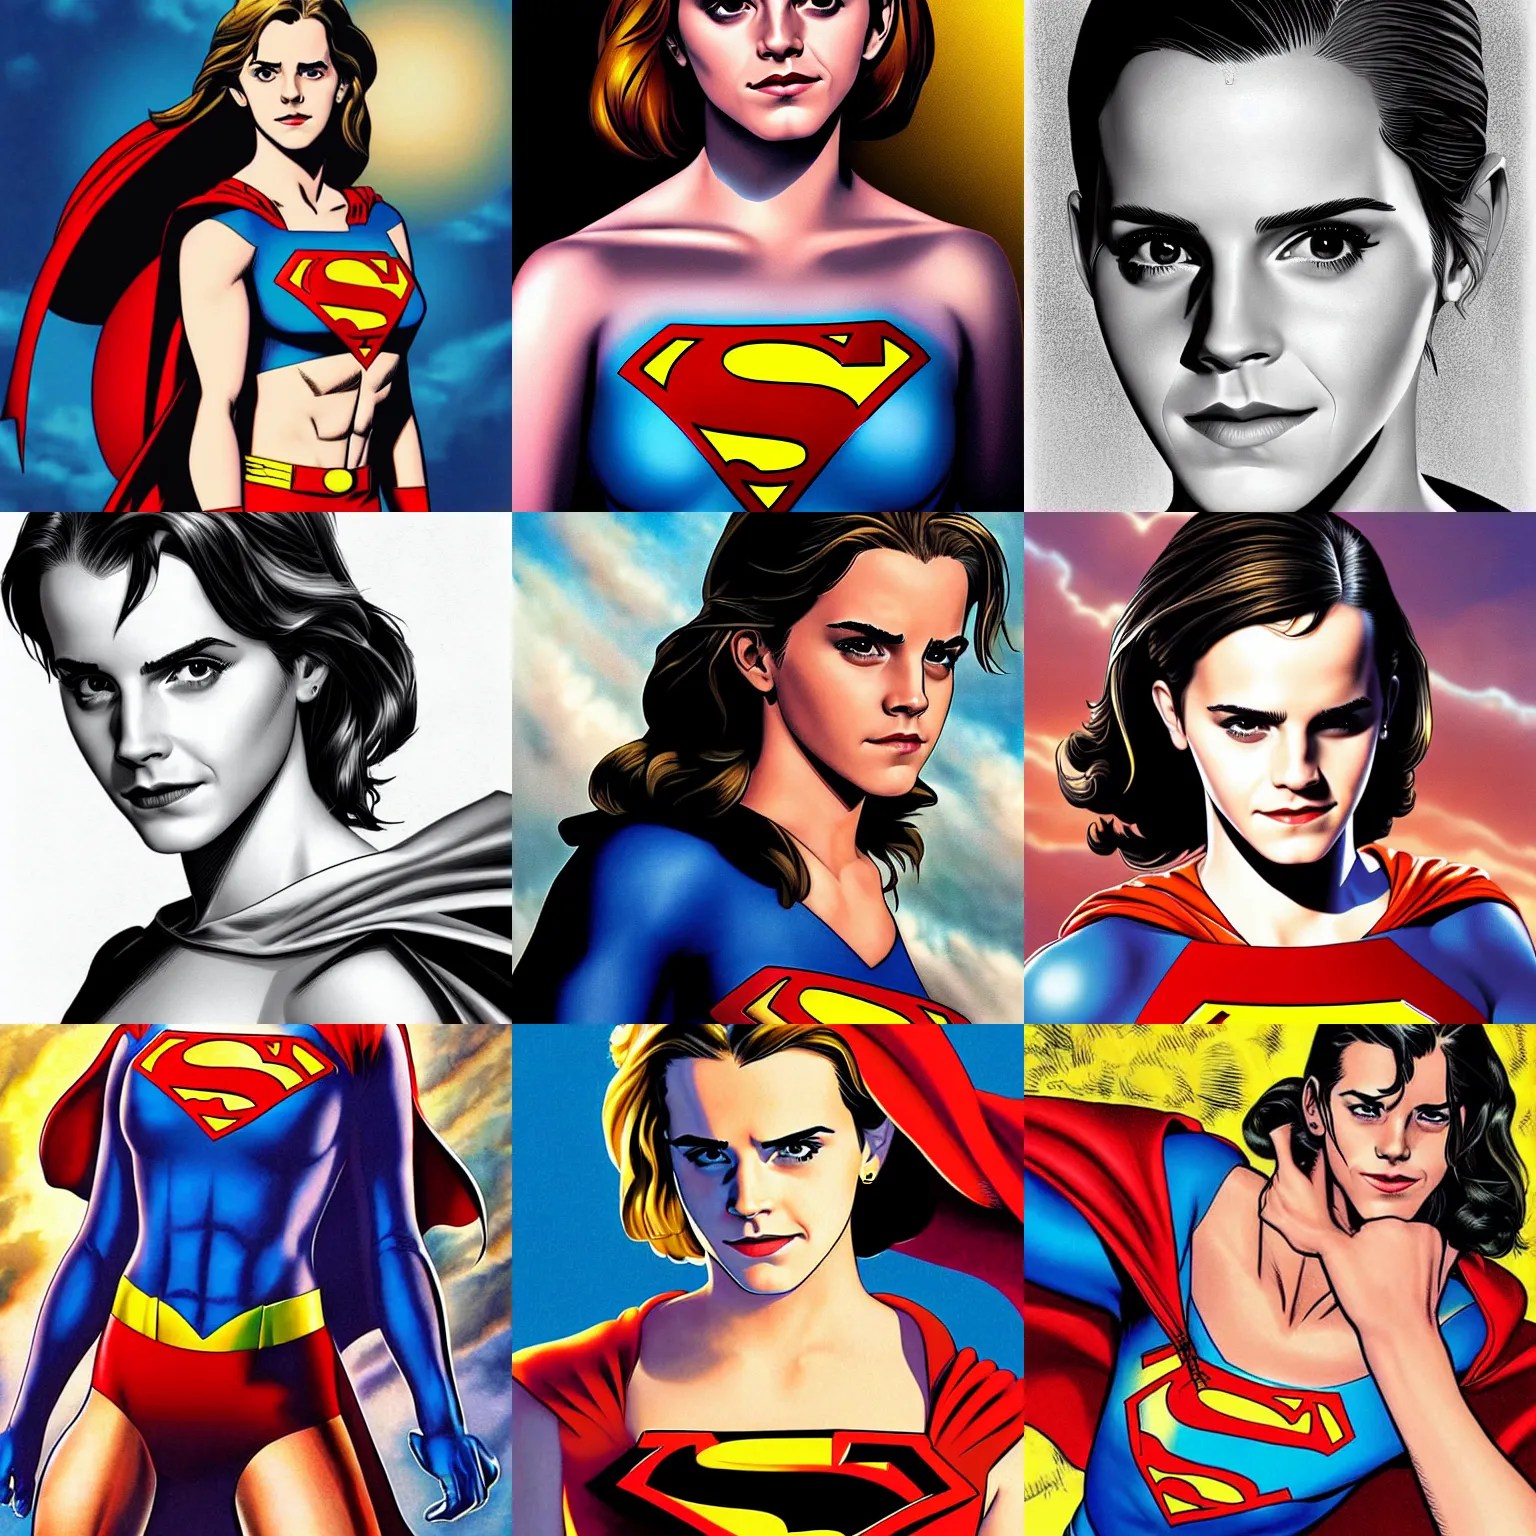 Prompt: Emma Watson as superman by brian bolland by alex ross digital painting digital art